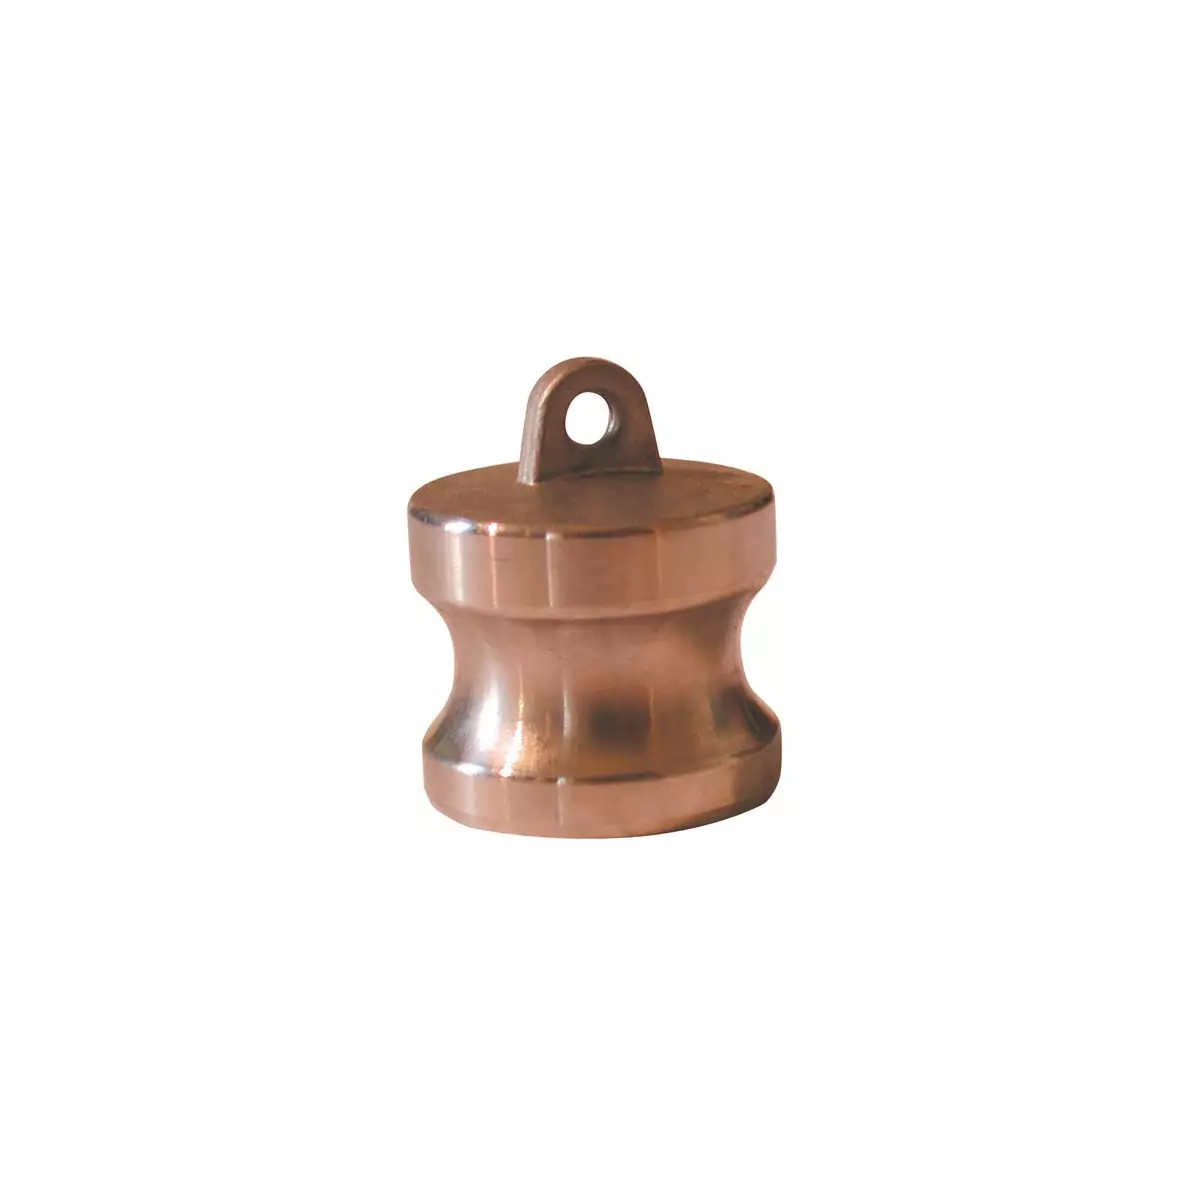 Brass male camlock plug - Type DP